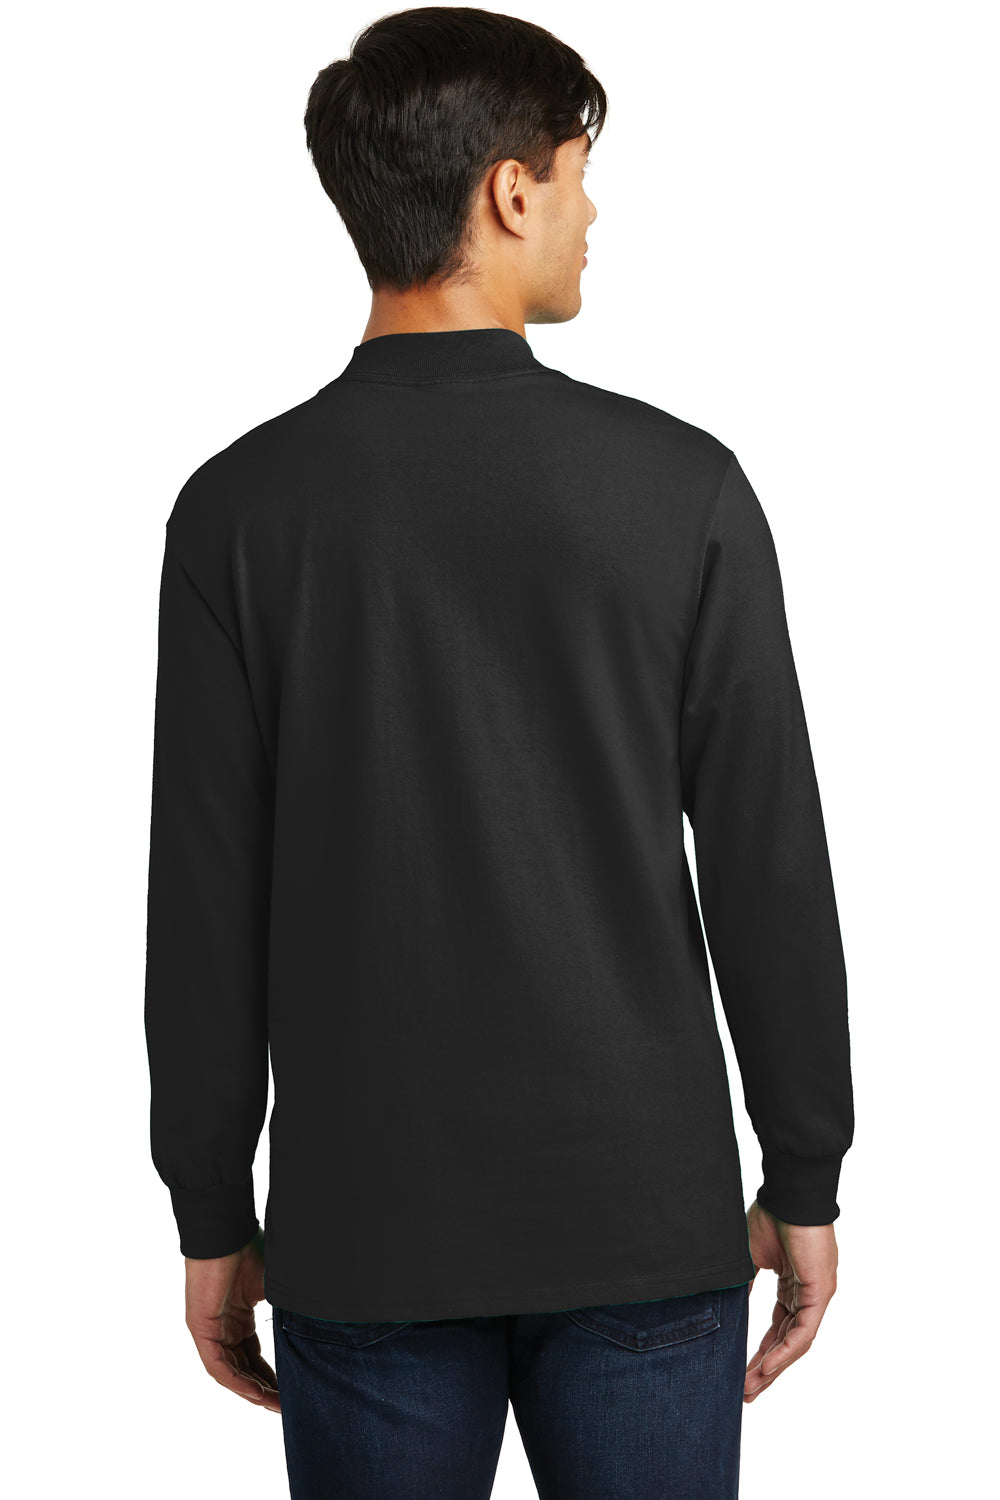 Port & Company PC61M Mens Essential Long Sleeve Mock Neck T-Shirt Black Back